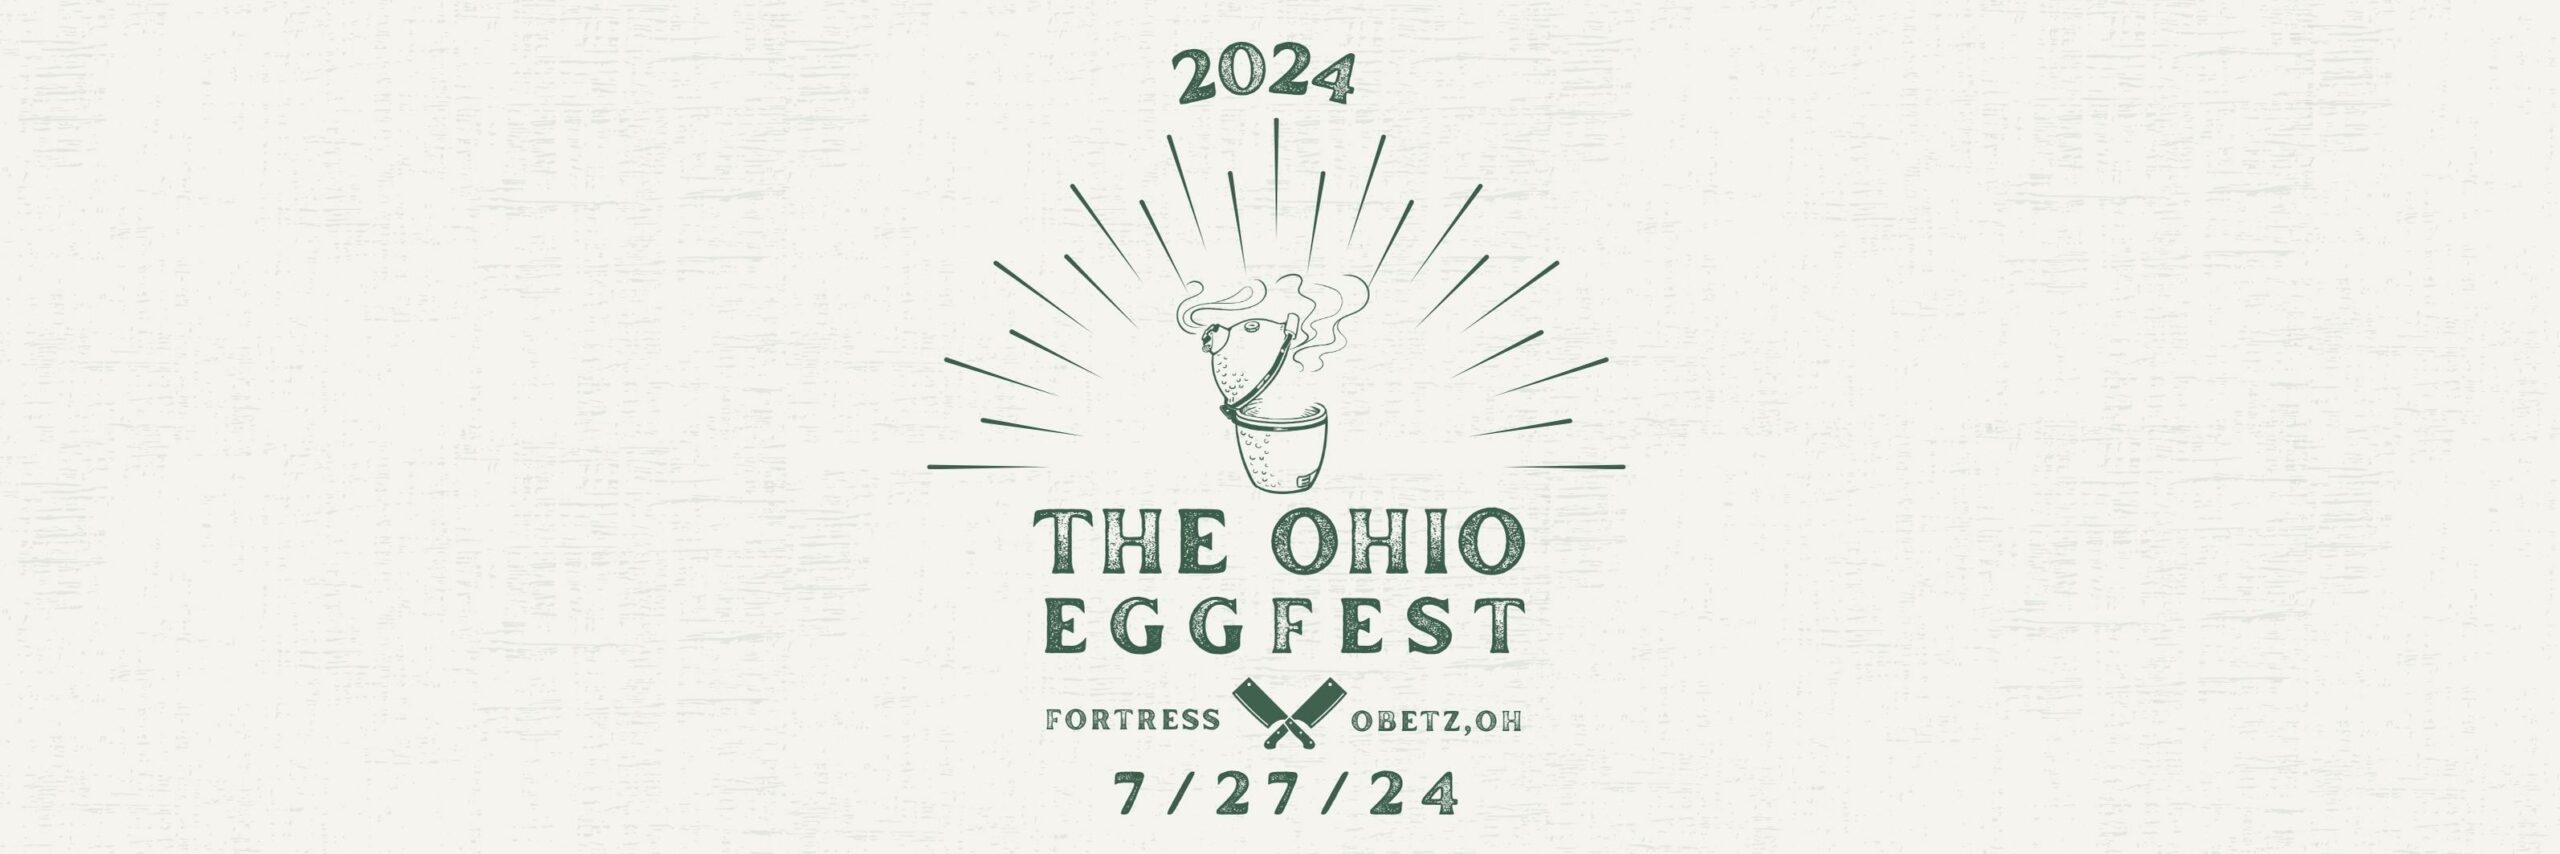 ohio-eggfest-site-image-1500-x-500-px-scaled